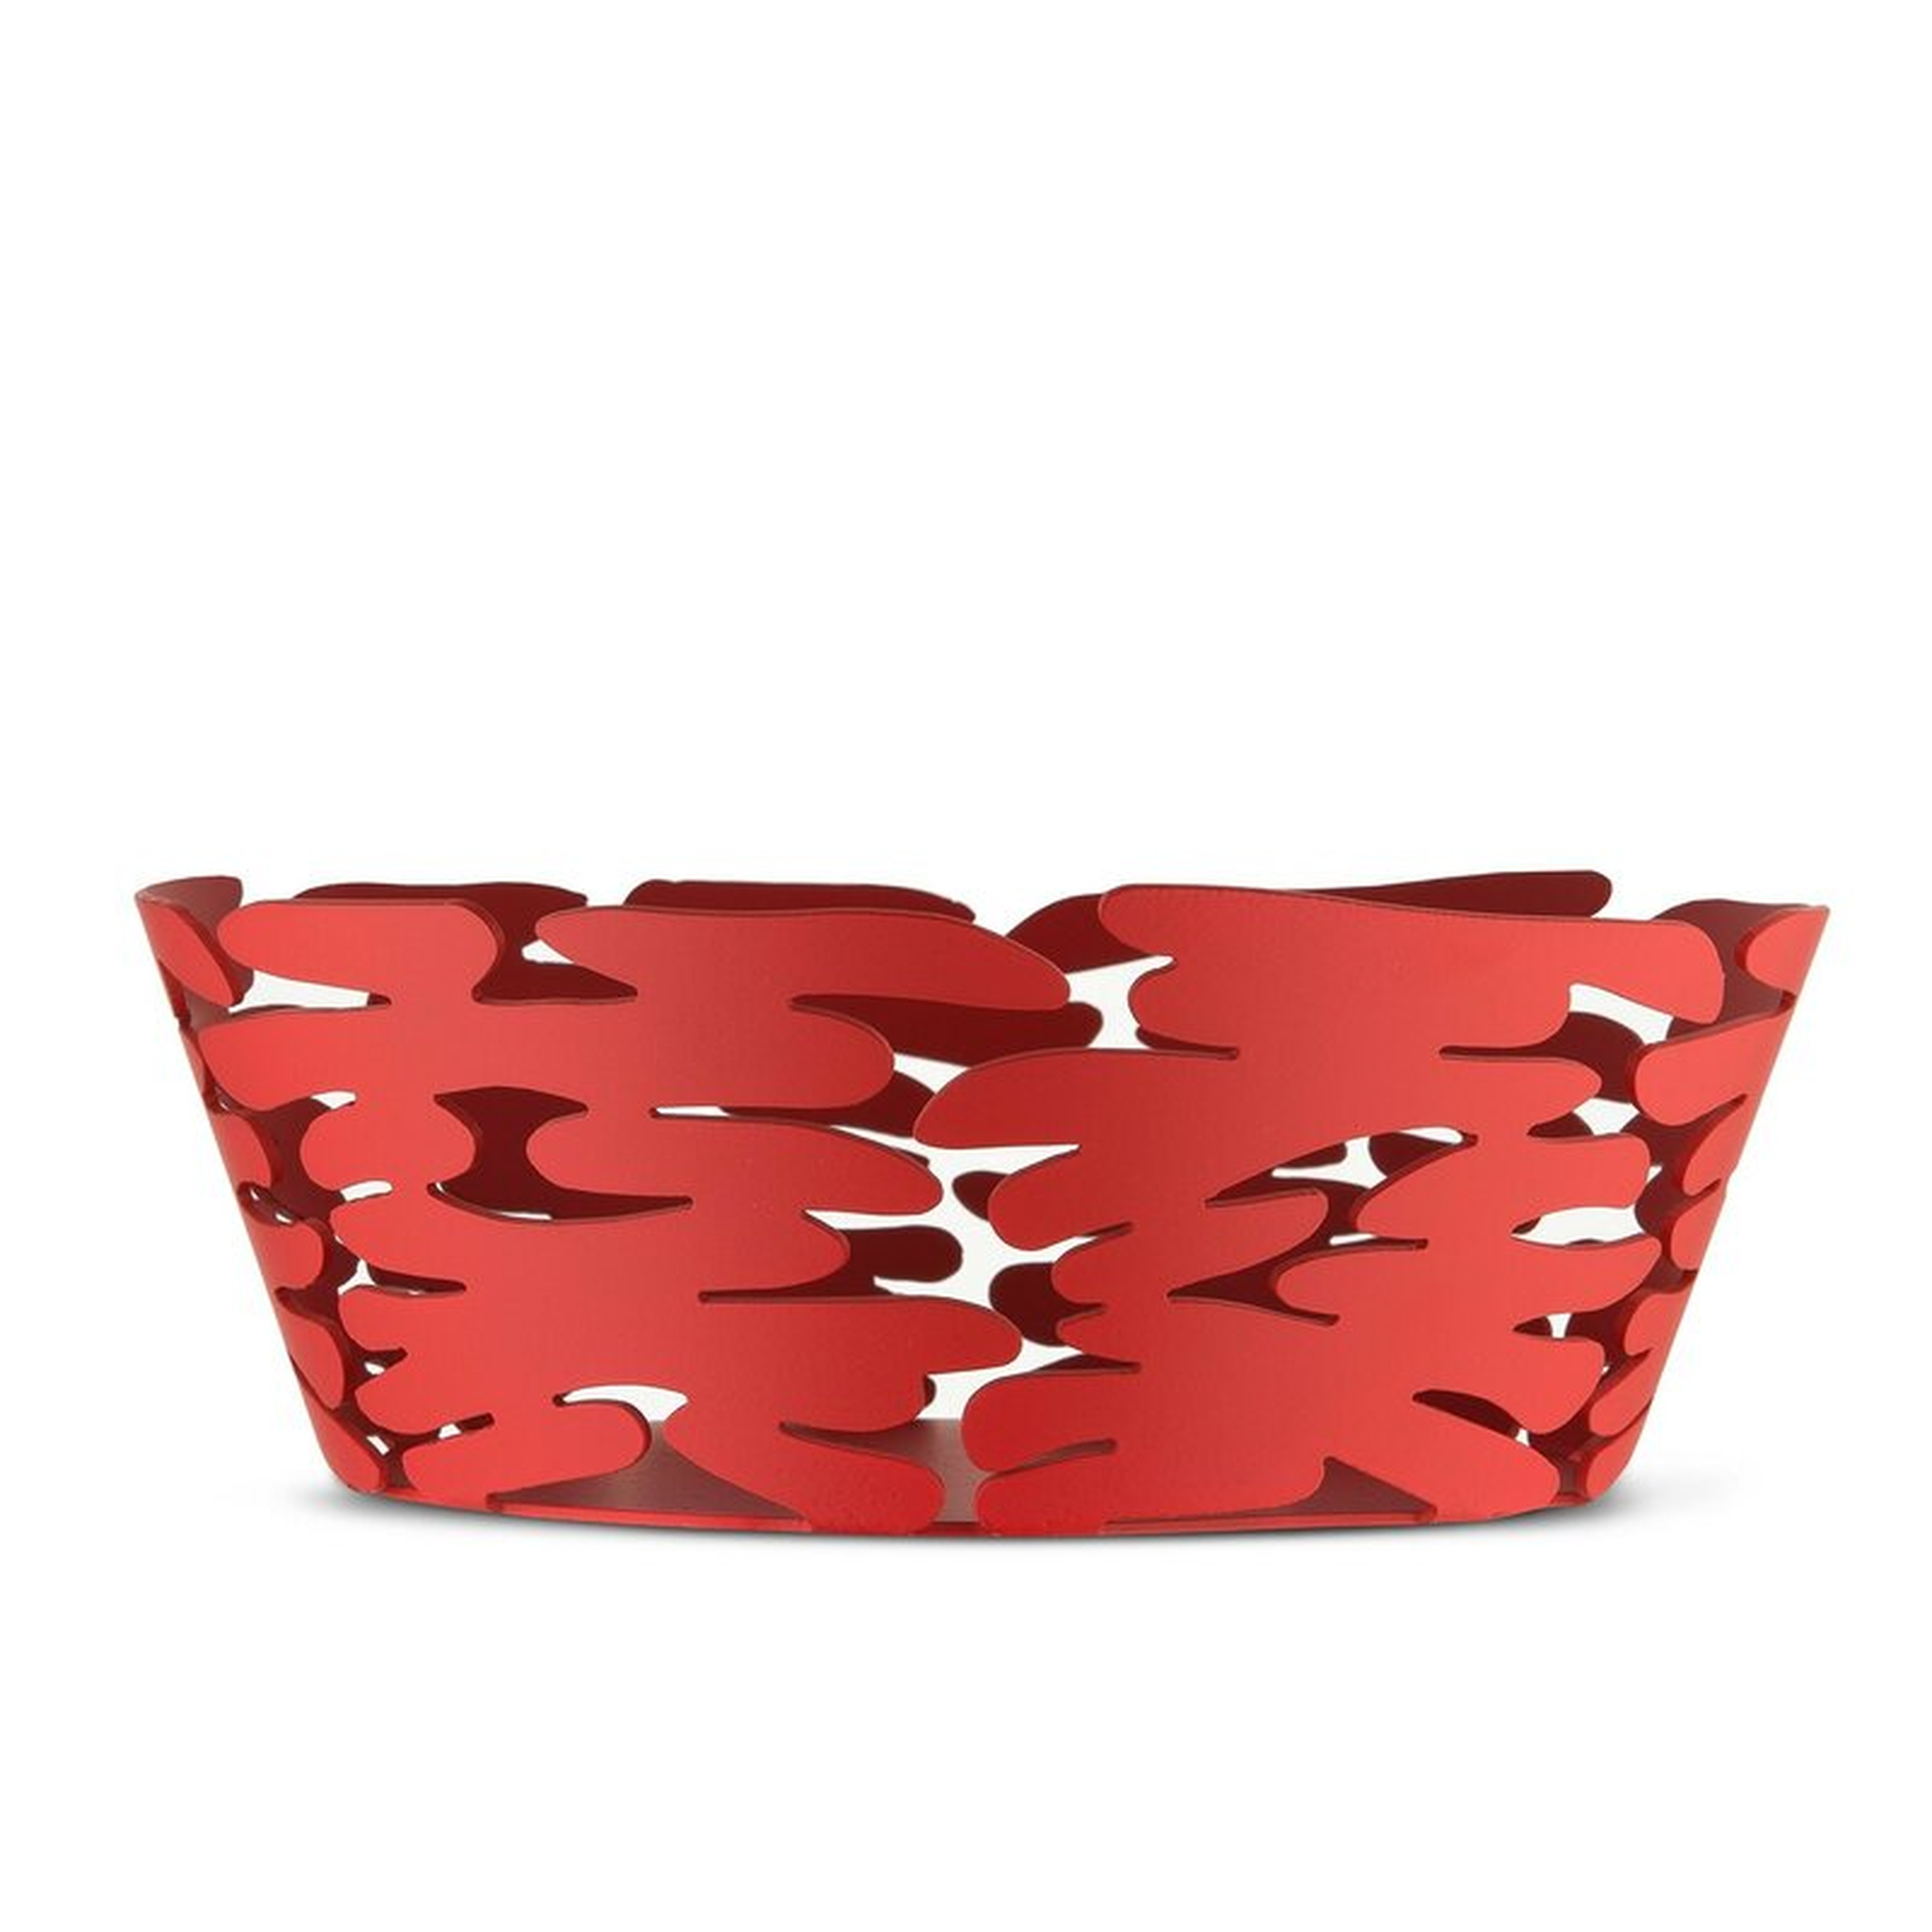 Alessi Decorative Bowls Color: Red, Size: 2.56" H x 7.09" W x 7.09" D - Perigold